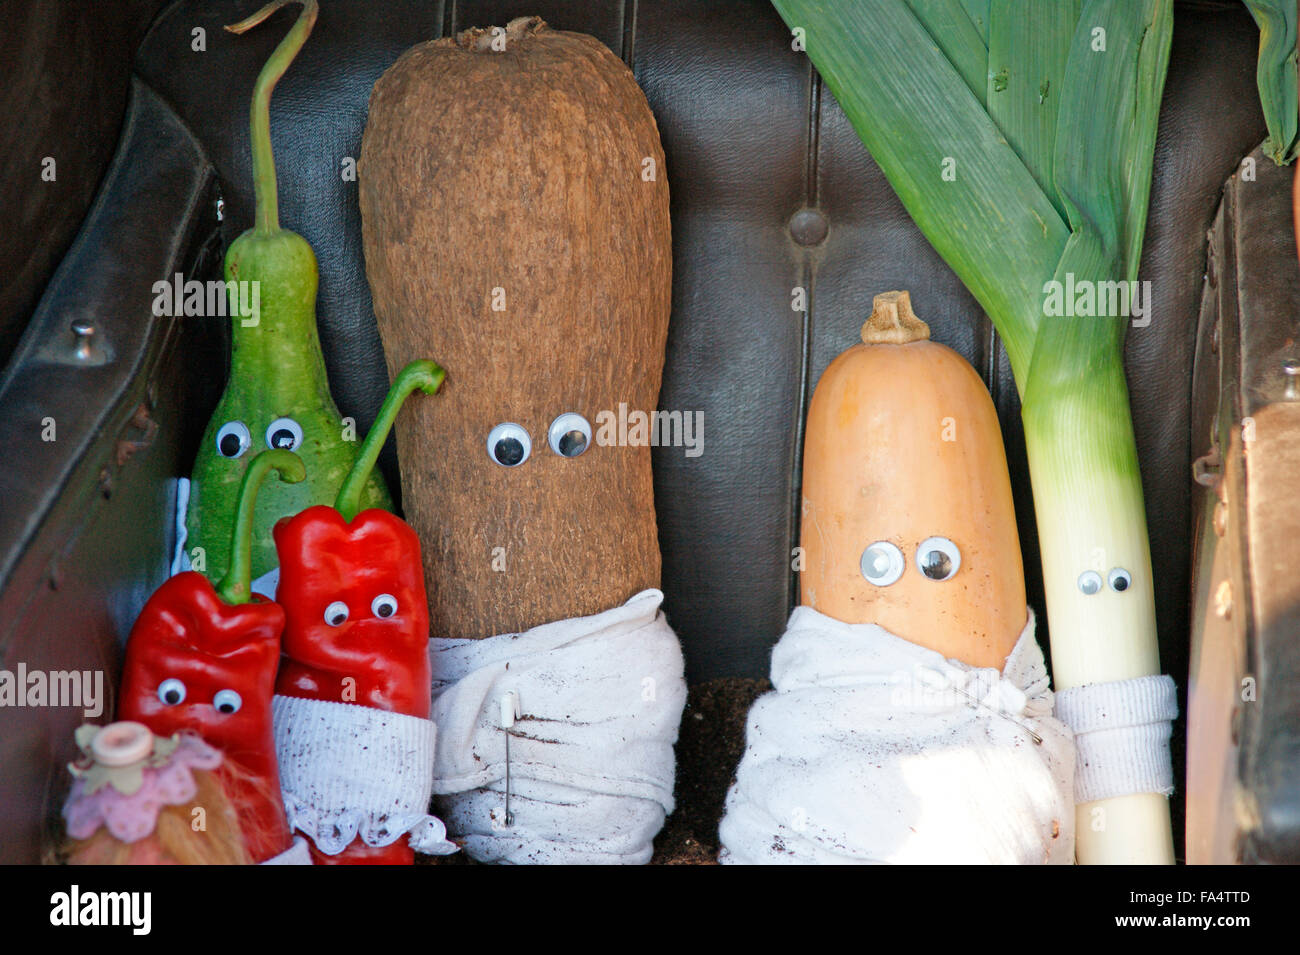 Vegetable babies in a pram Stock Photo